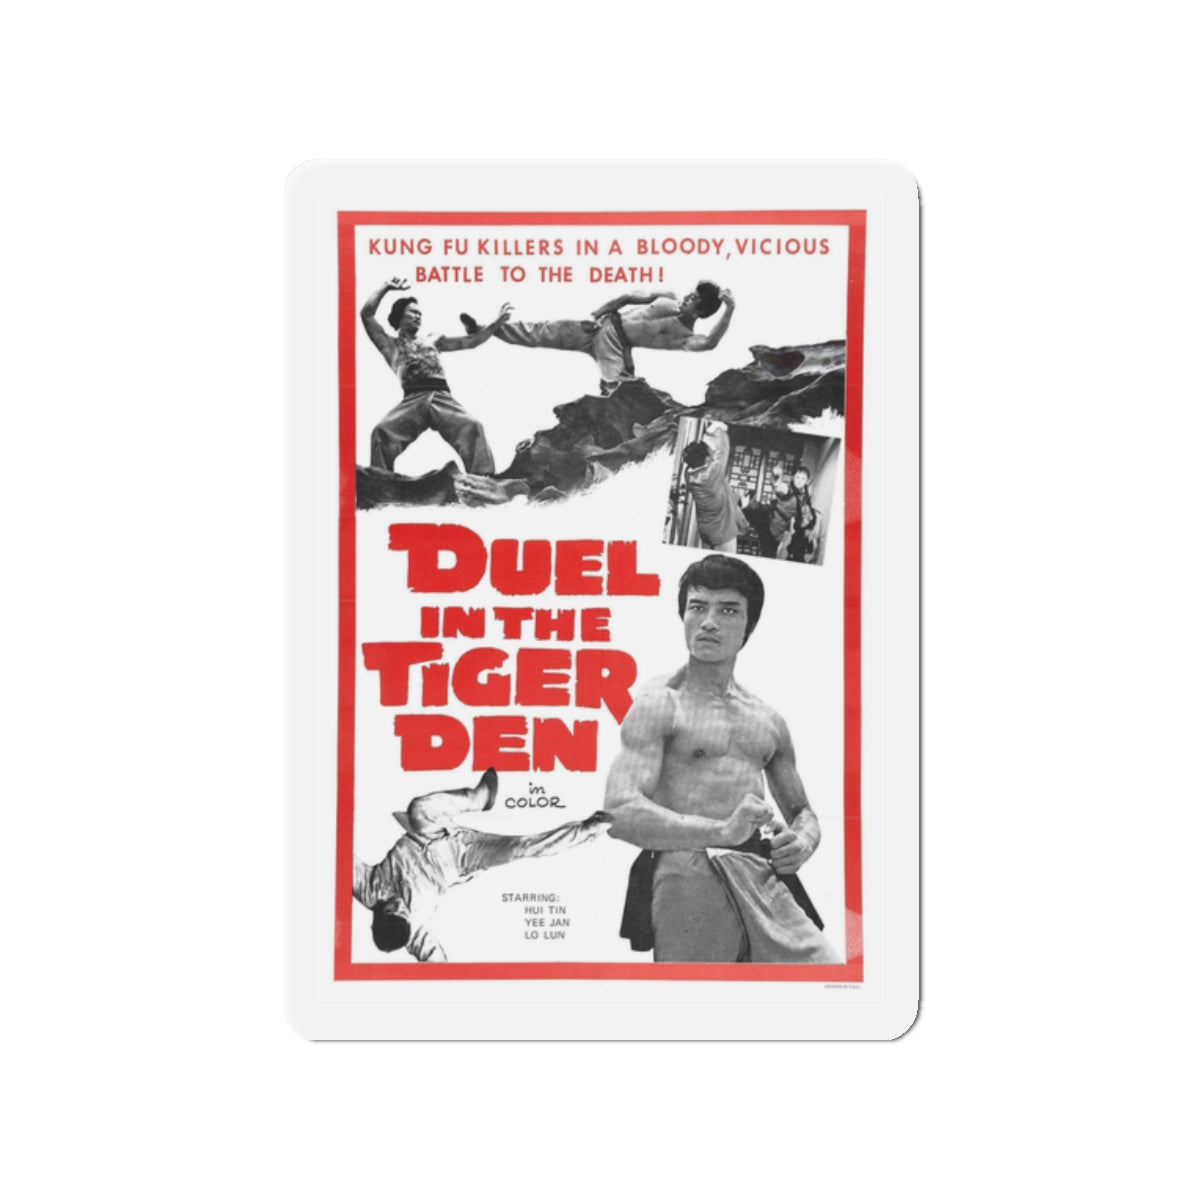 Duel, Spielberg, Polish Poster